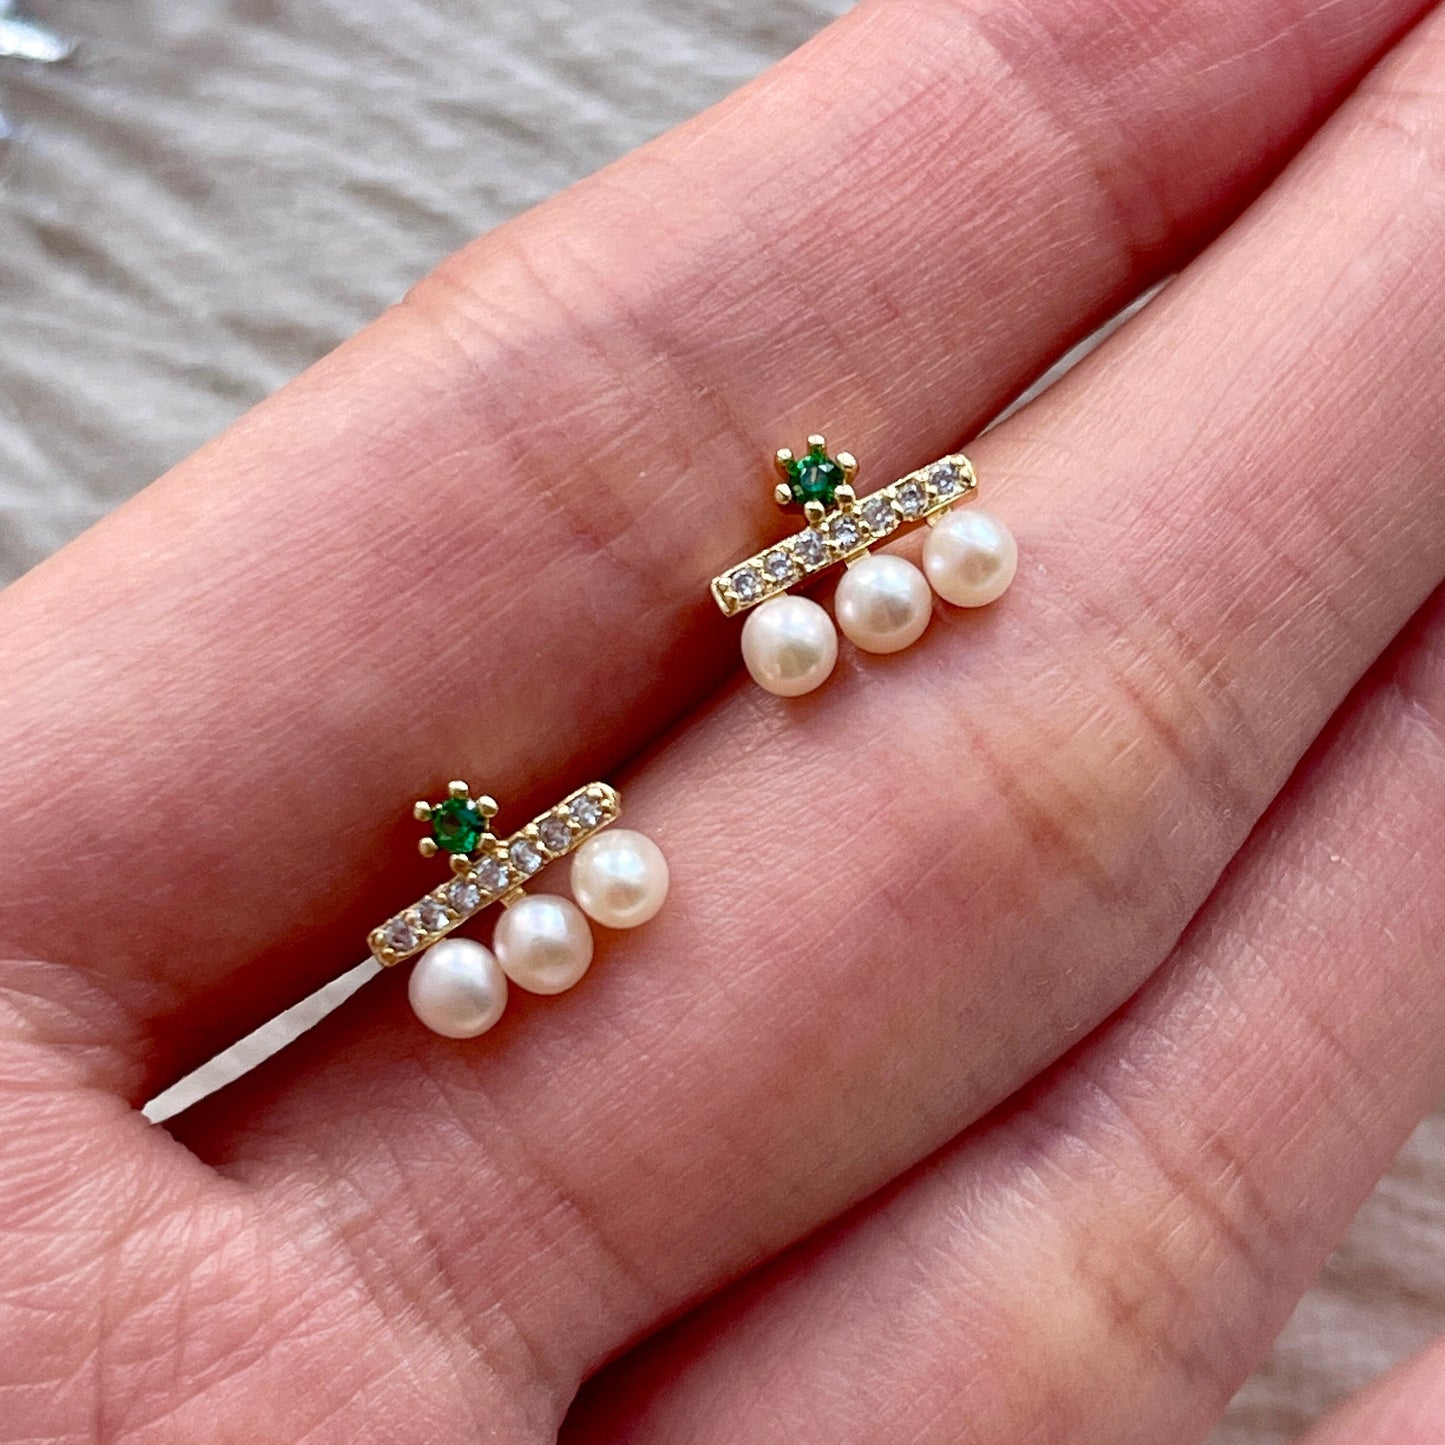 Emerald natural pearl earrings, Green emerald gold earrings, Dainty stud ear Climbers, Minimalist earrings, Bridesmaid wedding jewelry gift